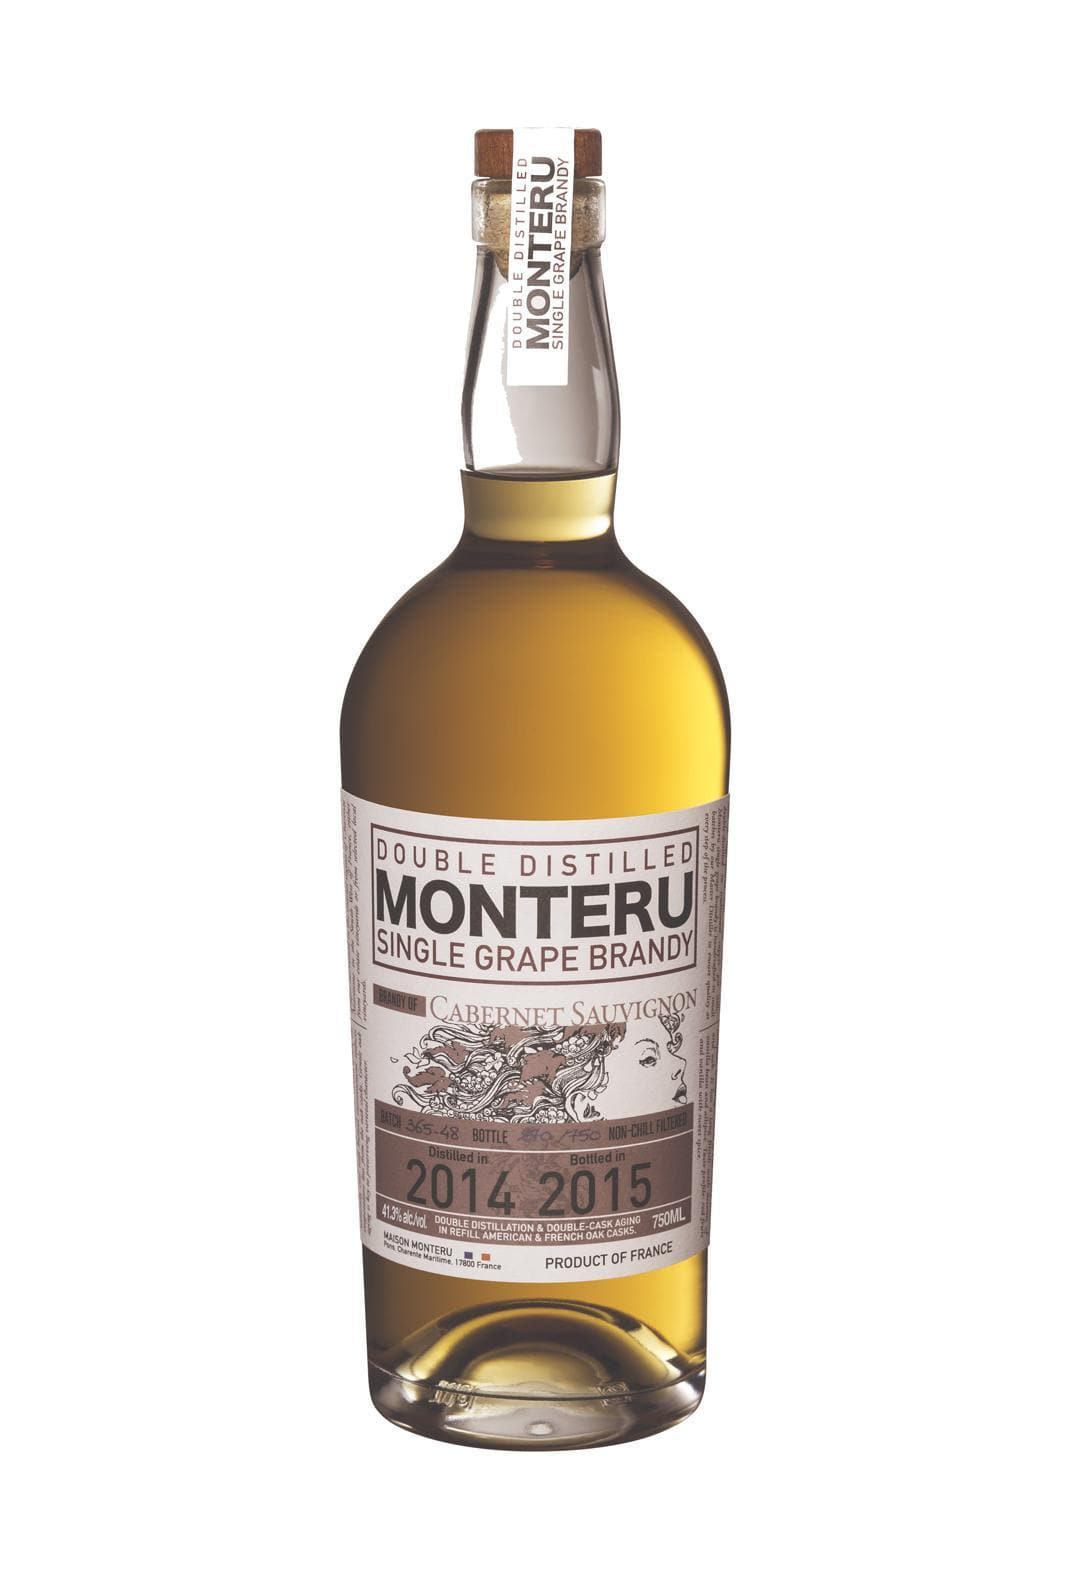 Naud Brandy Monteru Cab-Sauvignon 41.3% 700ml | Liquor & Spirits | Shop online at Spirits of France